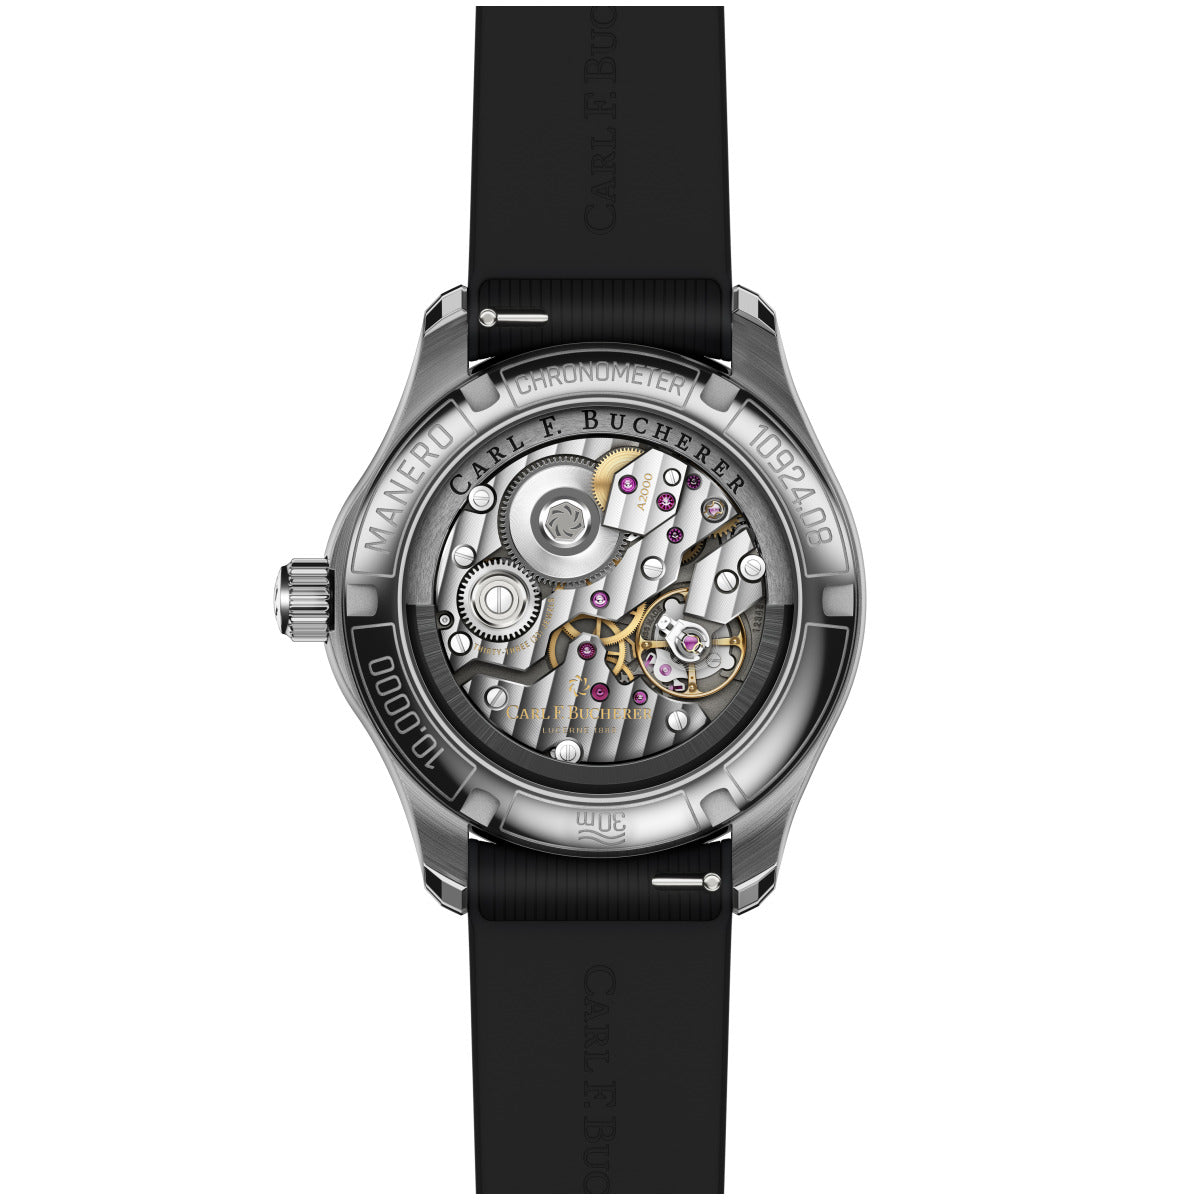 Carl F. Bucherer Manero Chronometer Stainless Steel Men's Watch